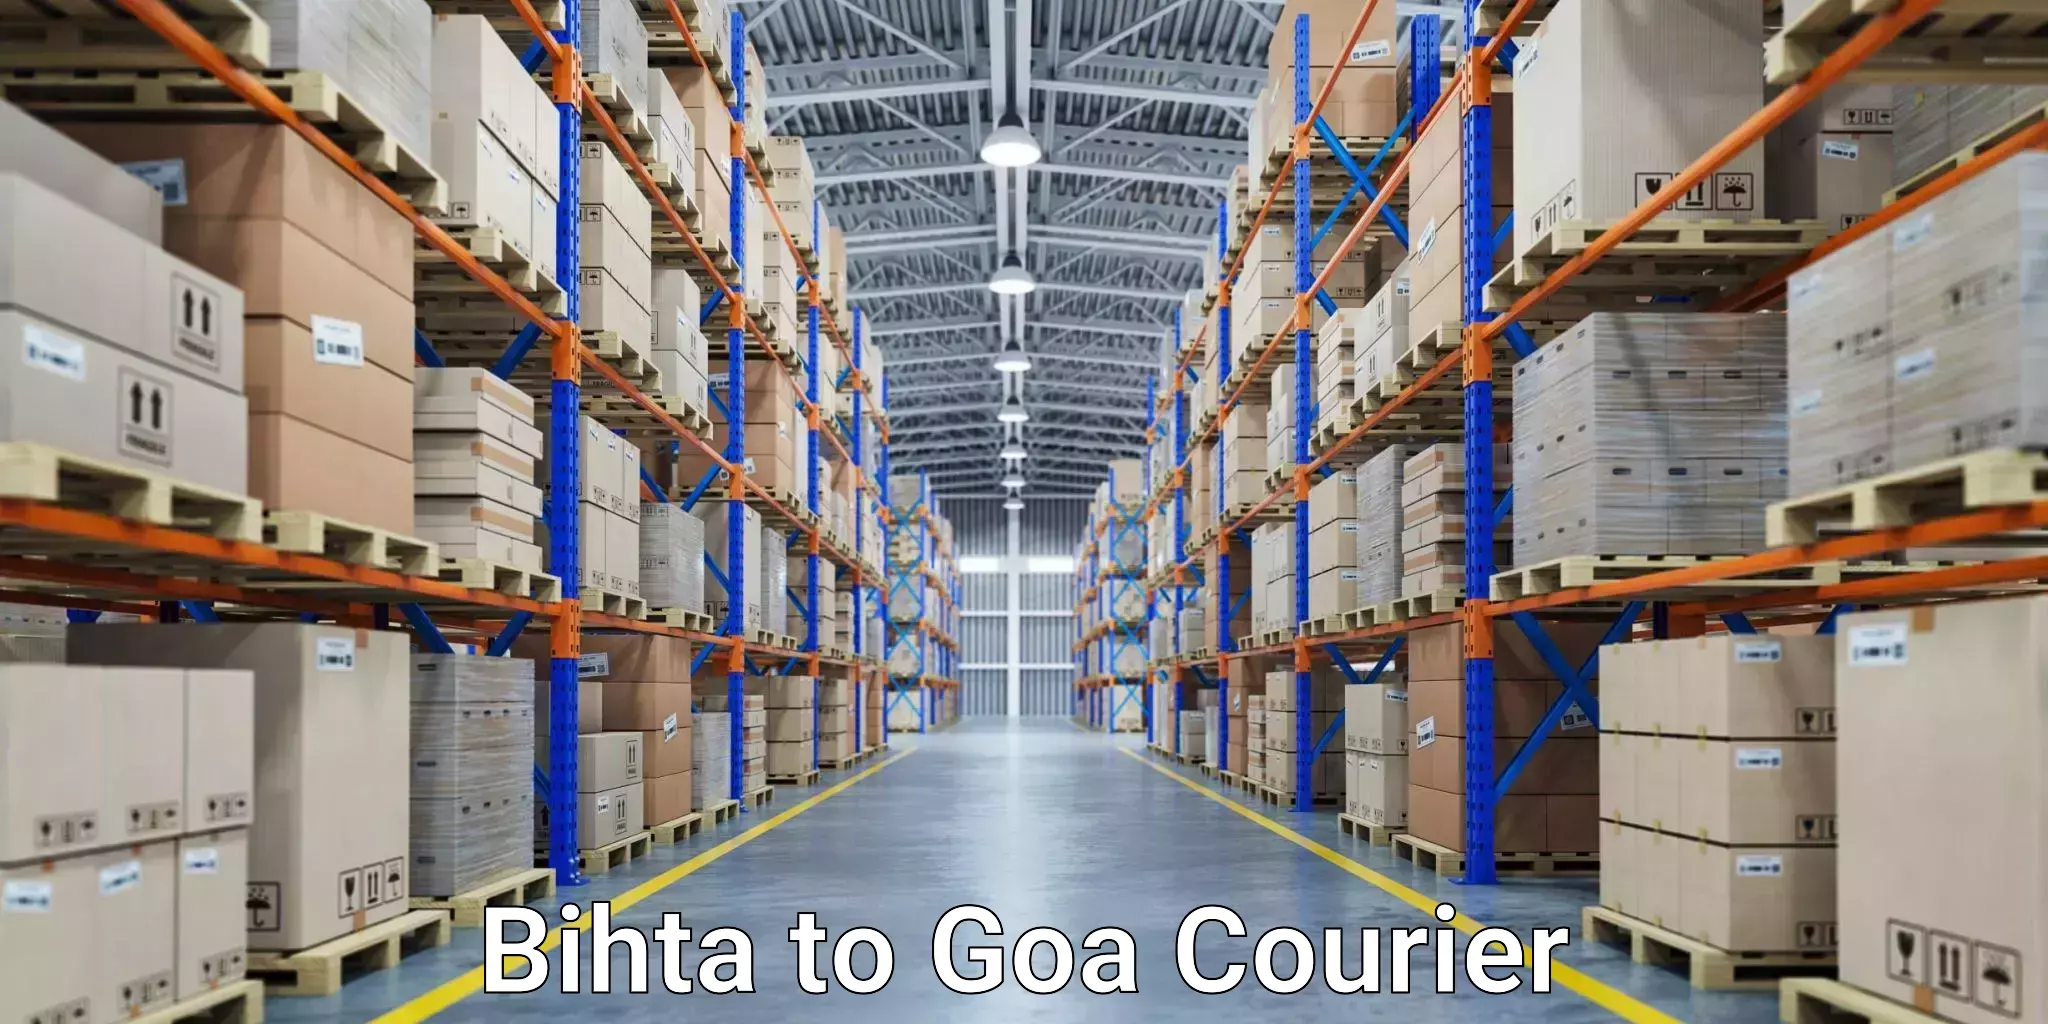 Ground shipping in Bihta to Goa